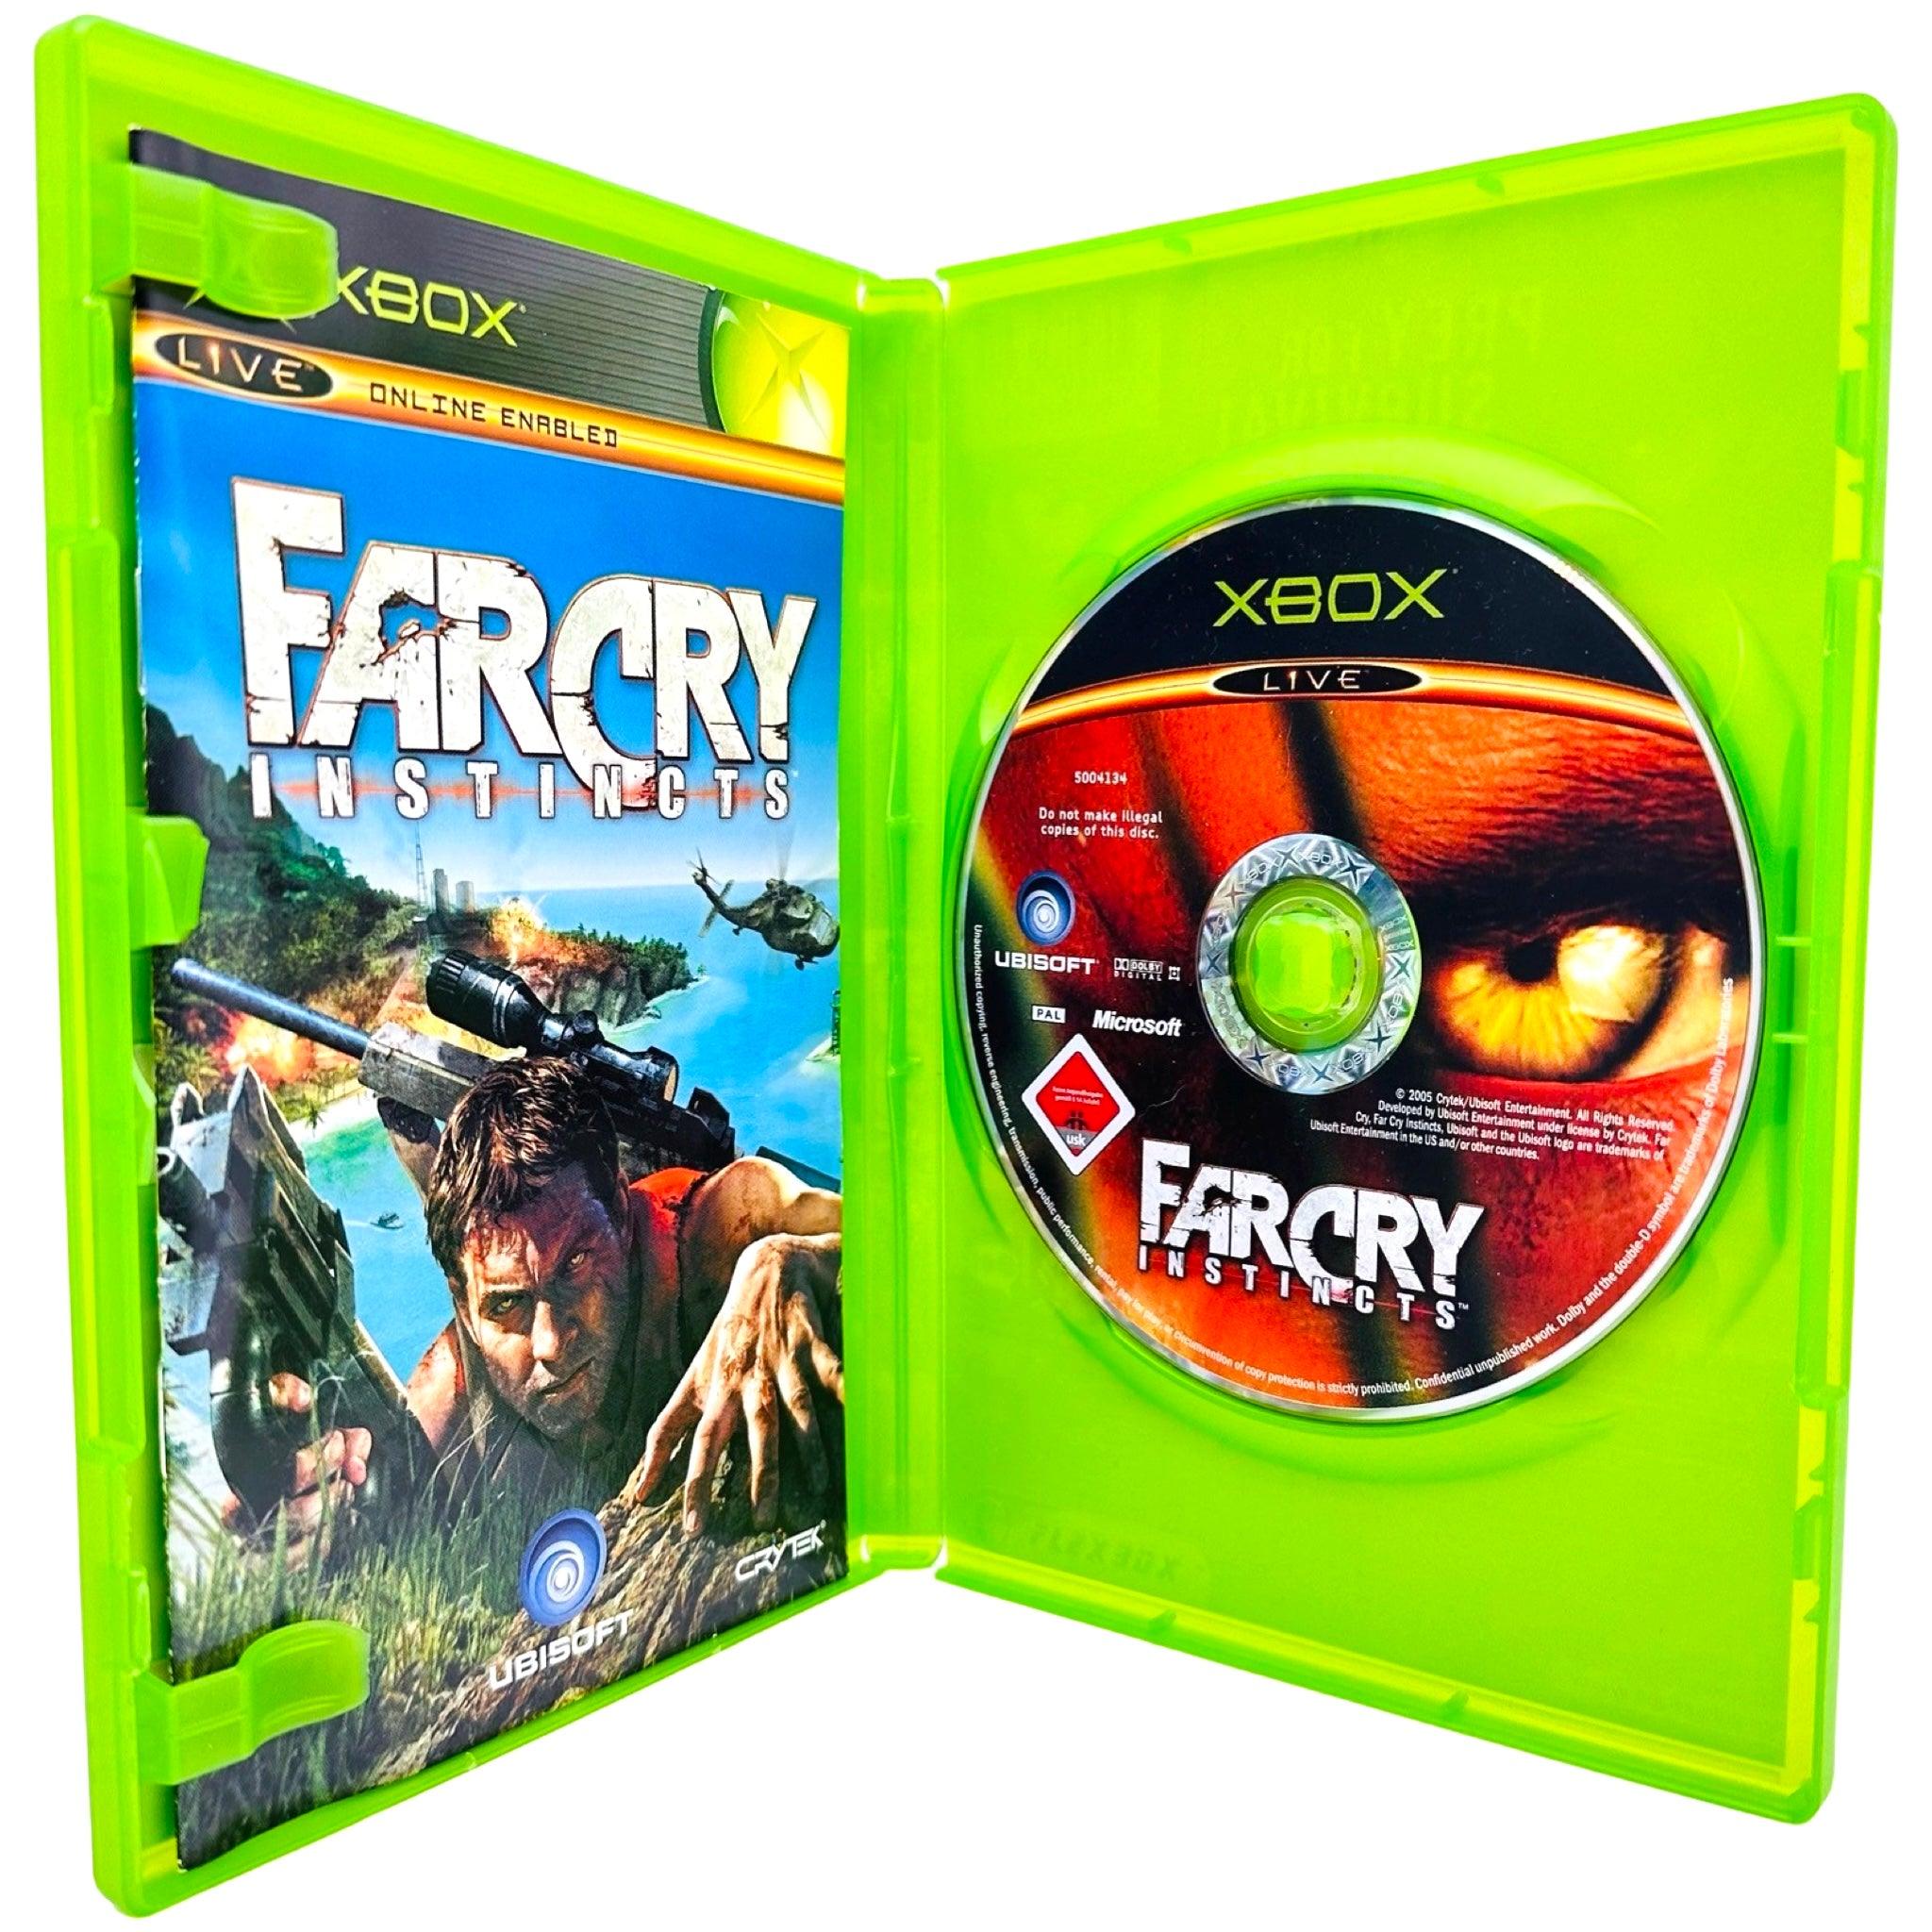 Xbox: 007: Far Cry Instincts - RetroGaming.no